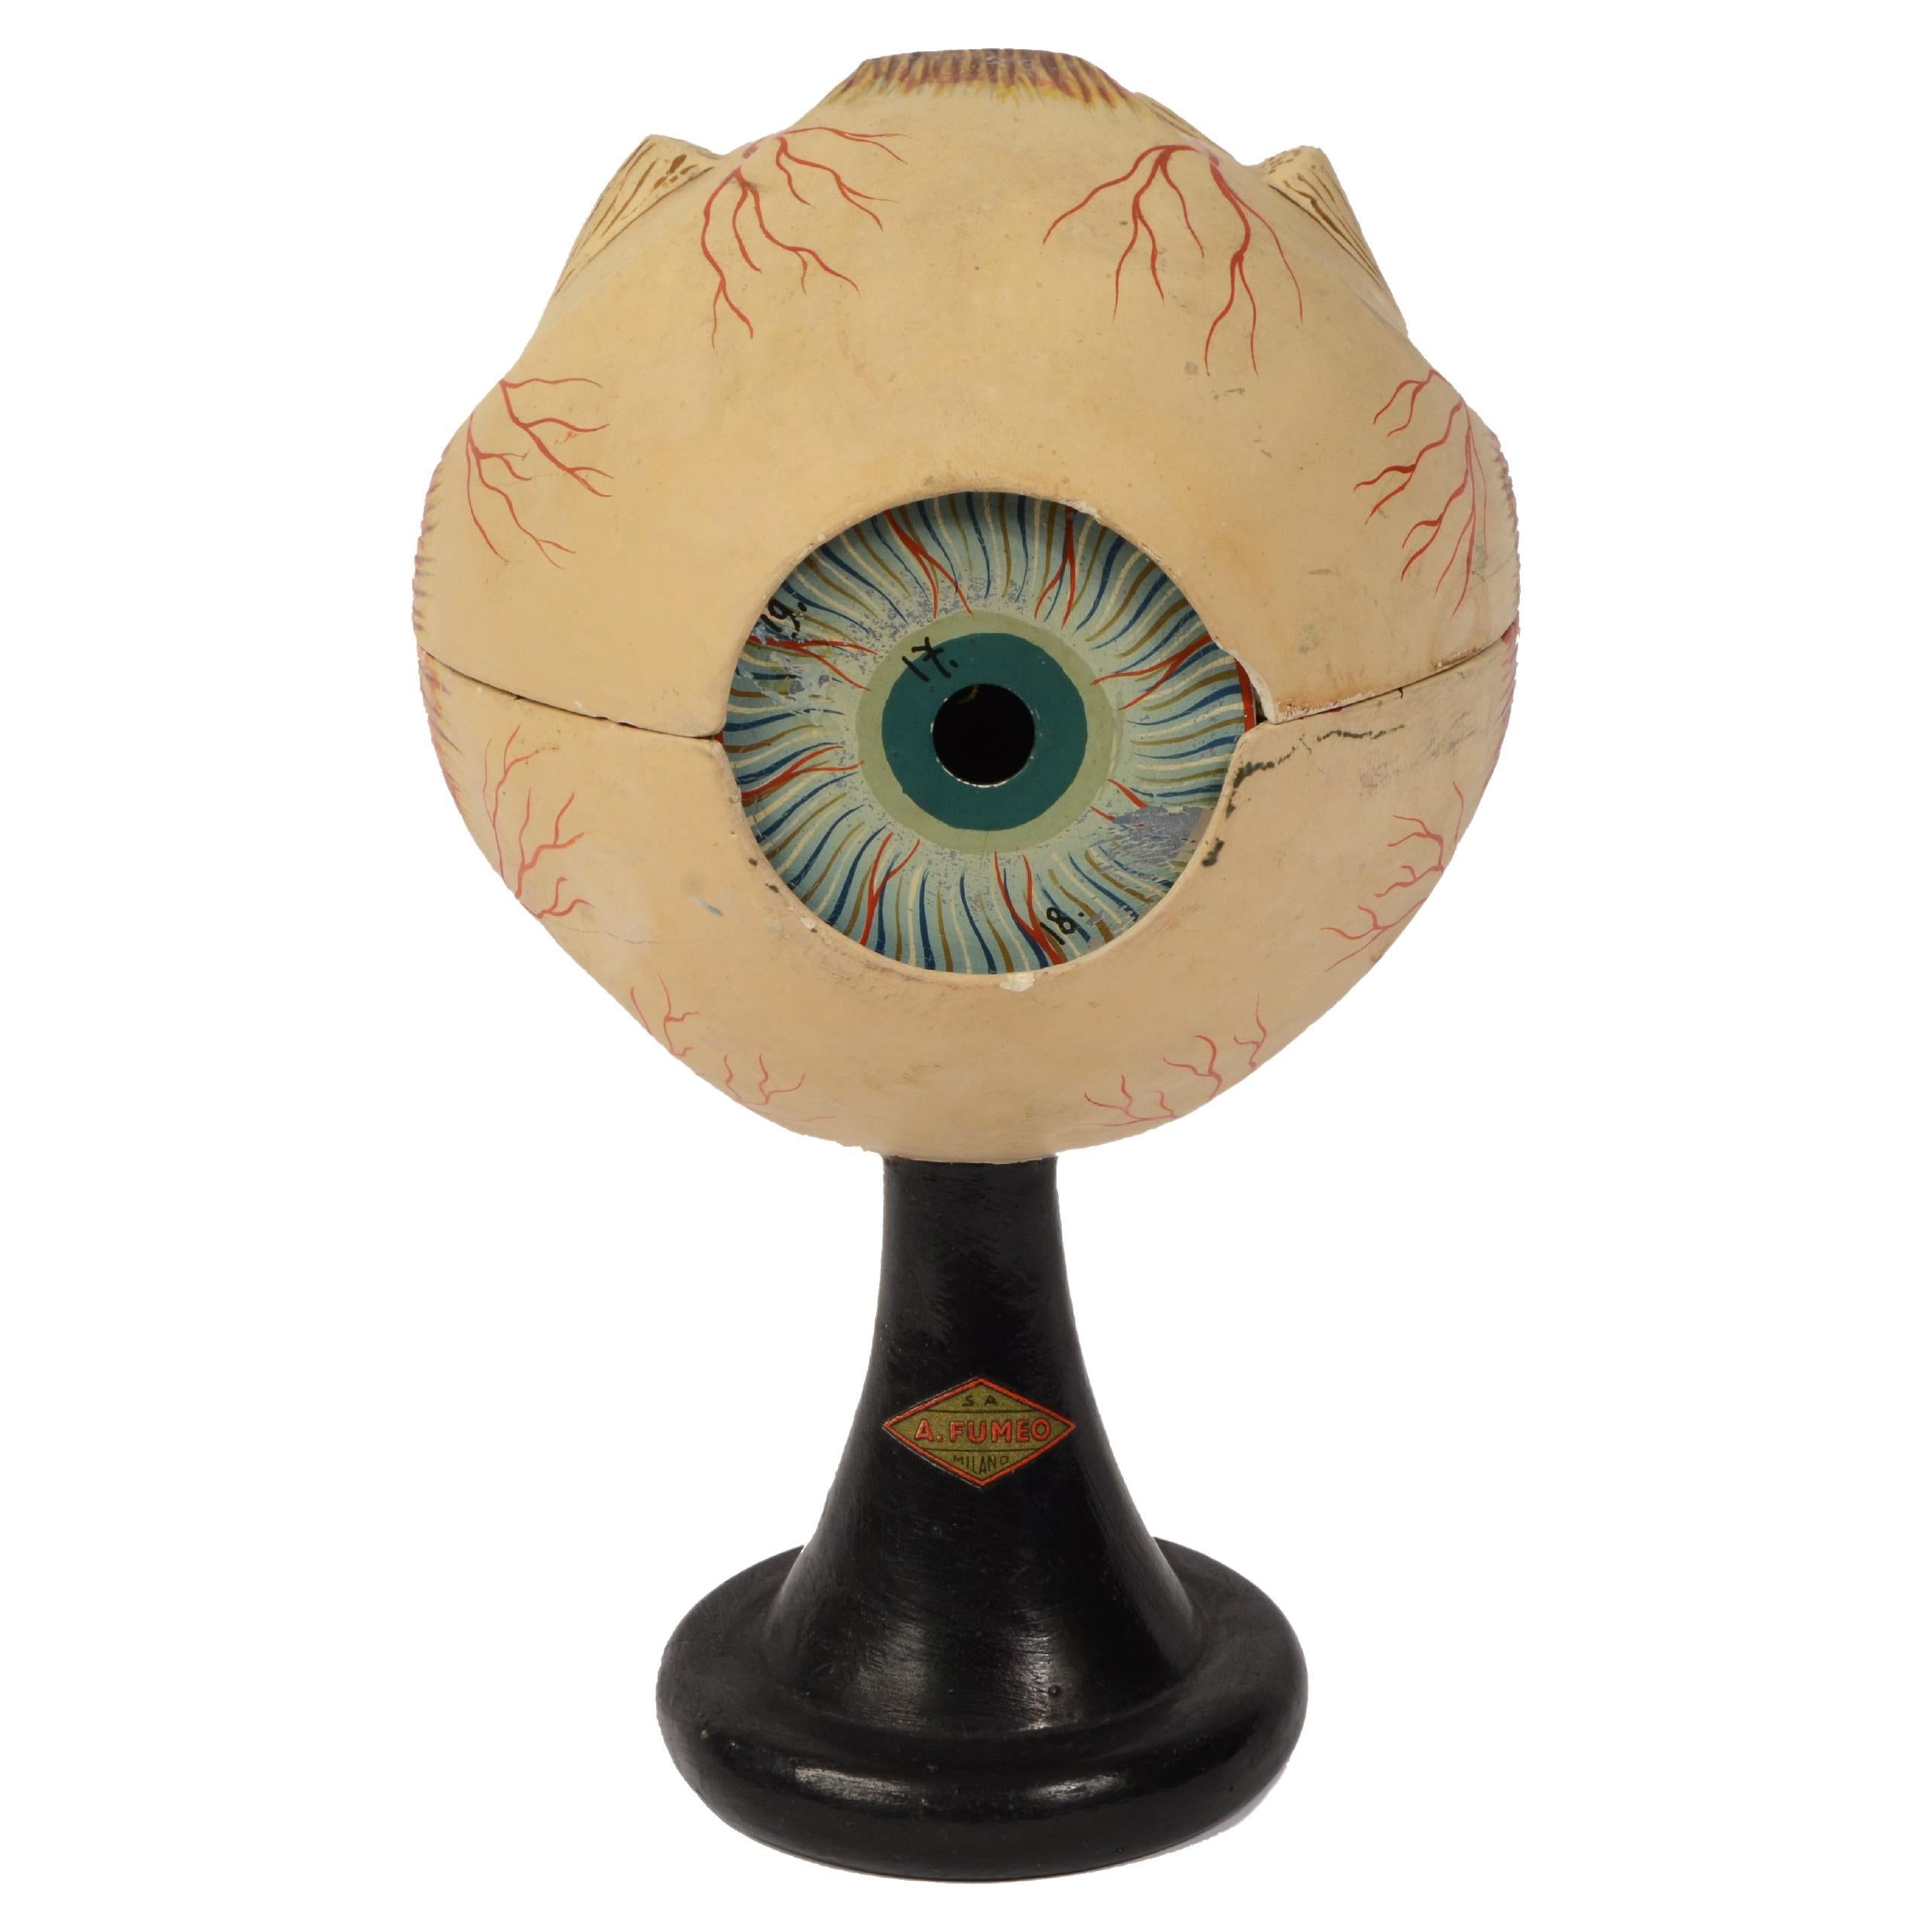 1900s S.A.A. Fumeo of Milan Anatomical Teaching Model of the Human Eye